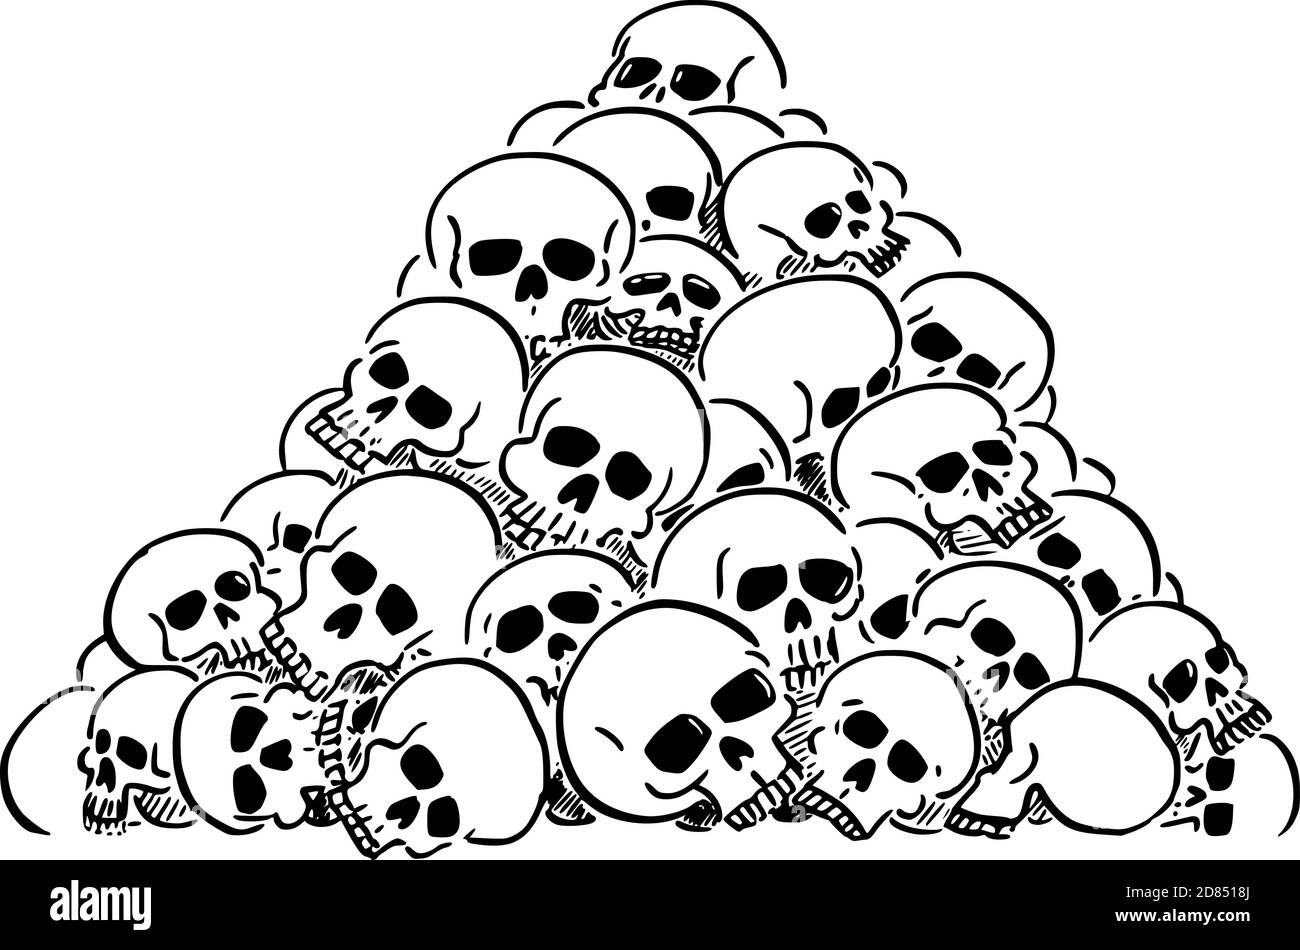 Vector cartoon illustration of heap or pile of human skulls. Concept of violence, epidemic, war or death. Stock Vector